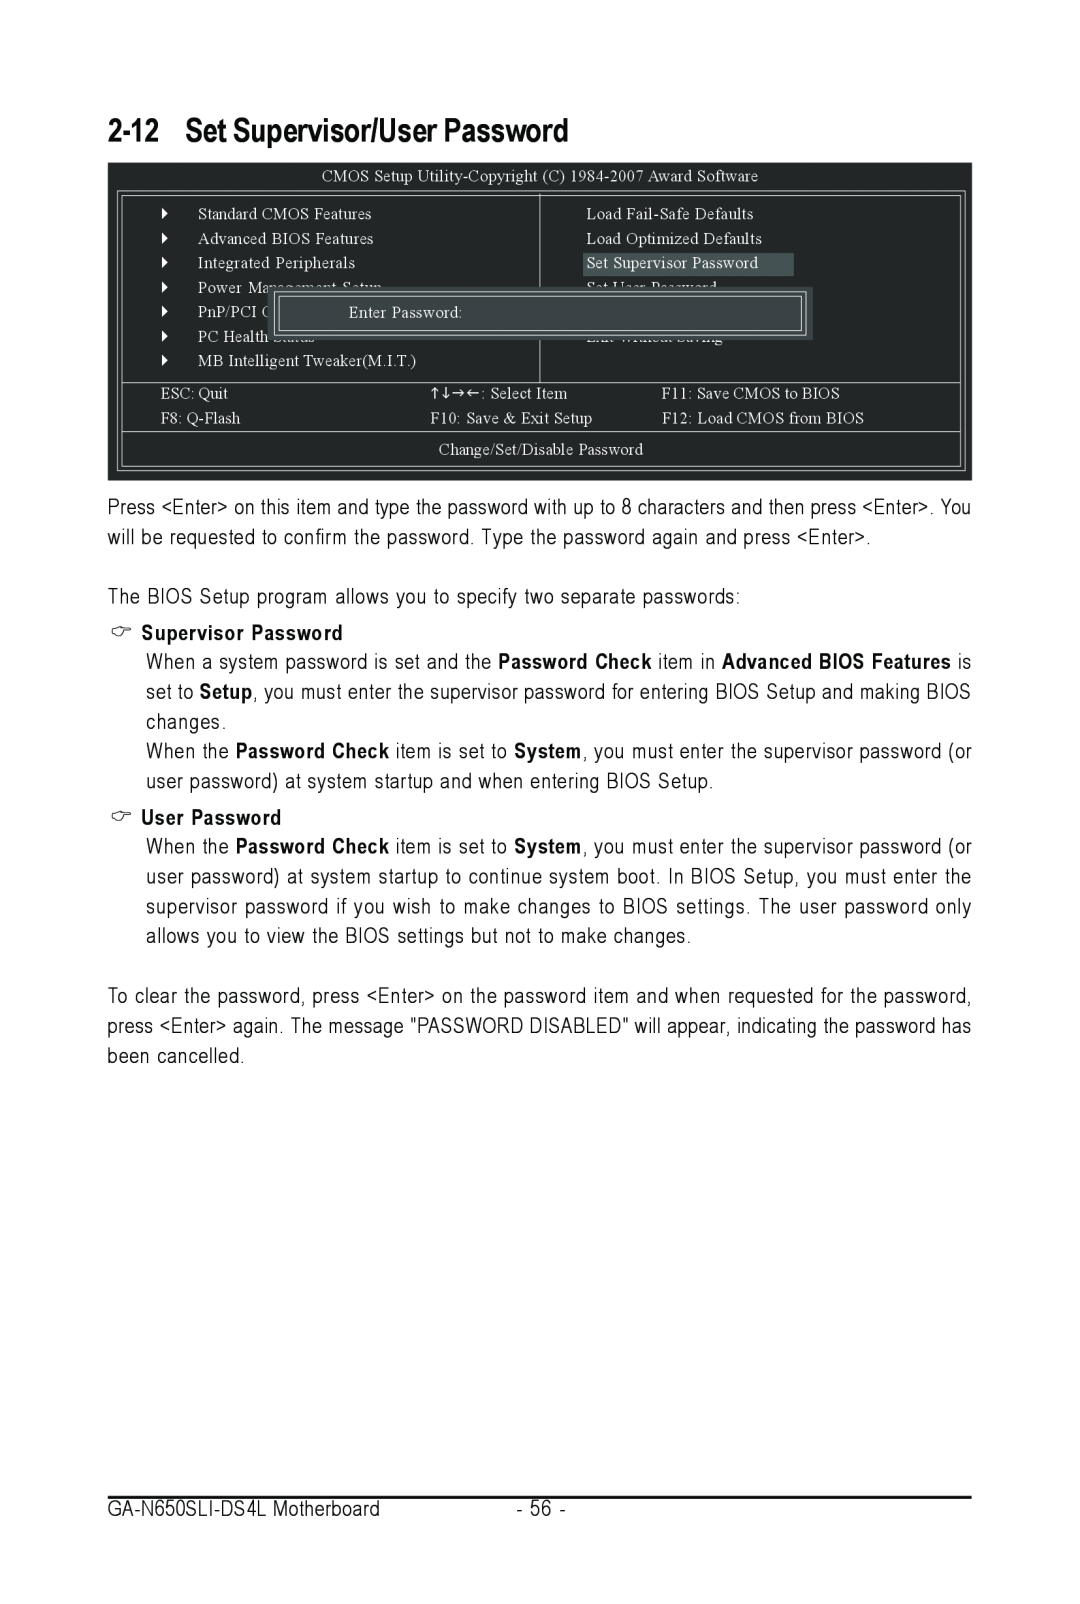 Intel GA-N650SLI-DS4L user manual 2-12, Set Supervisor/User Password, Supervisor Password 